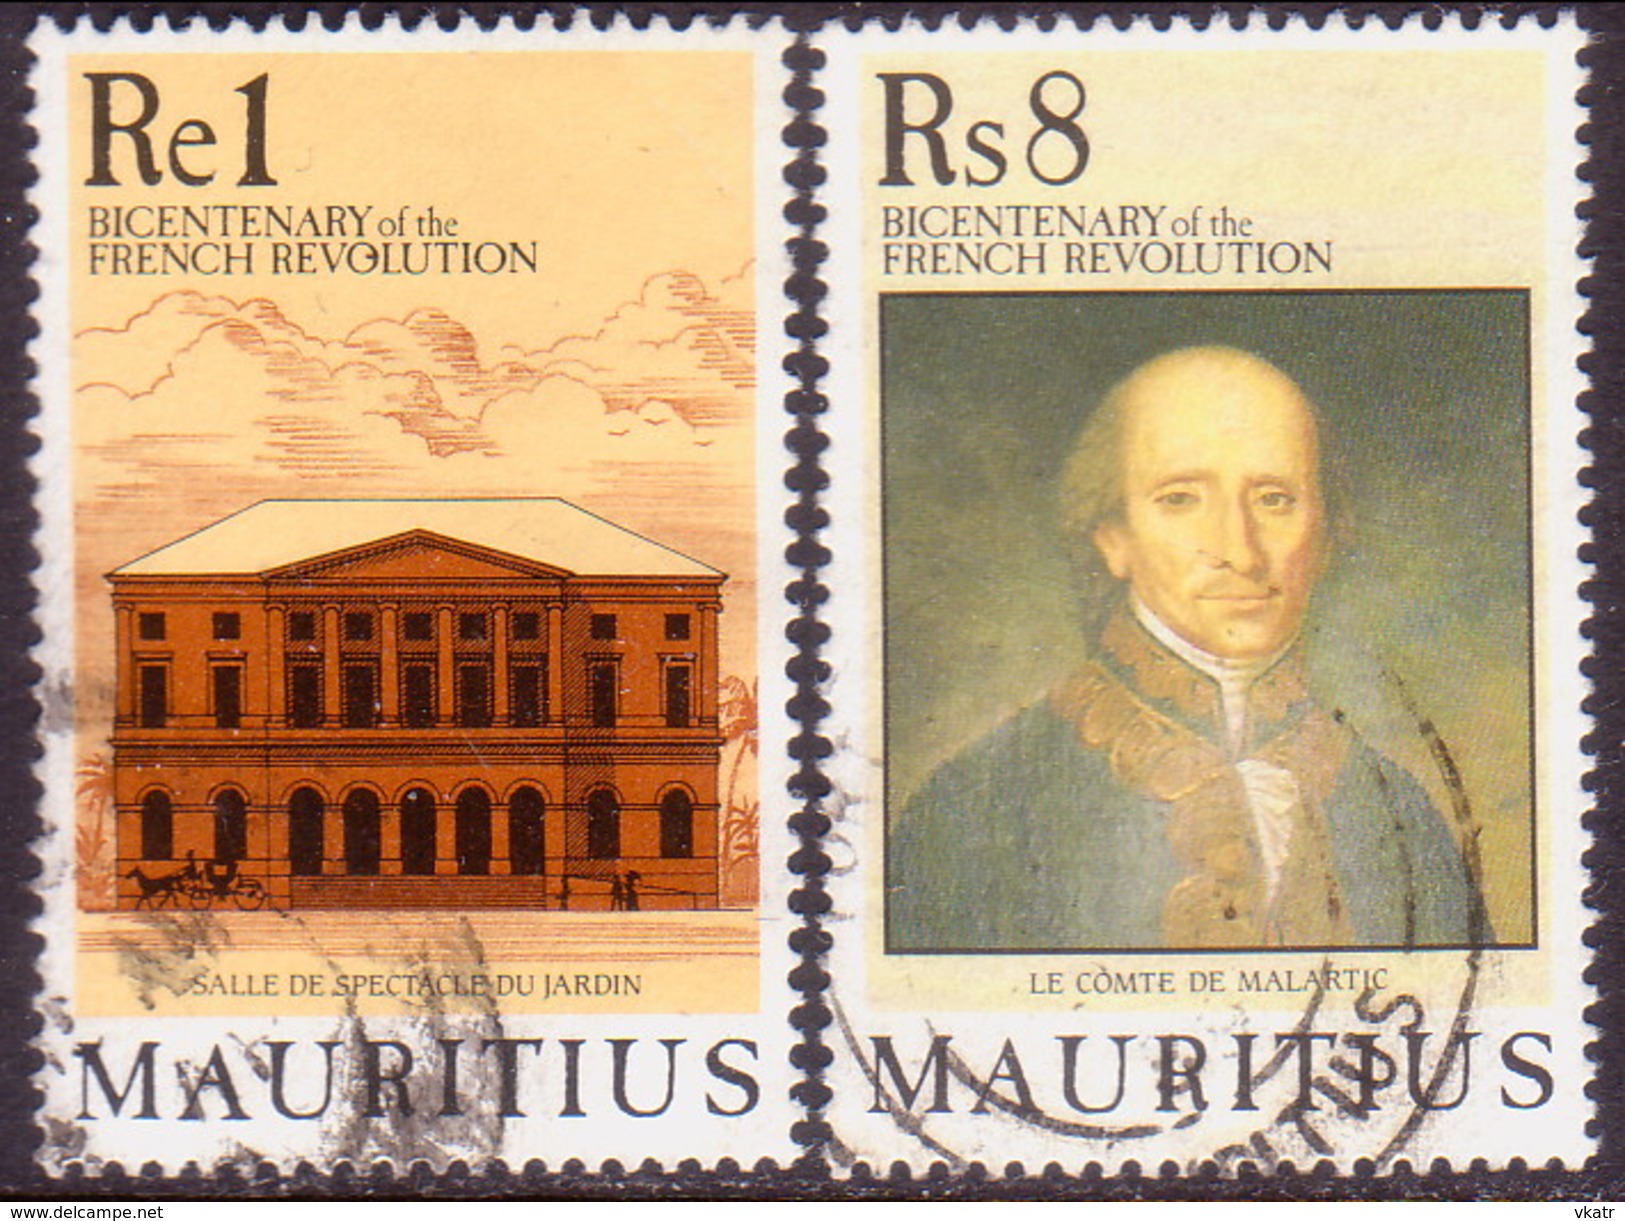 MAURITIUS 1989 SG #819-20 1R, 8R Part Set Used French Revolution - Mauritius (1968-...)